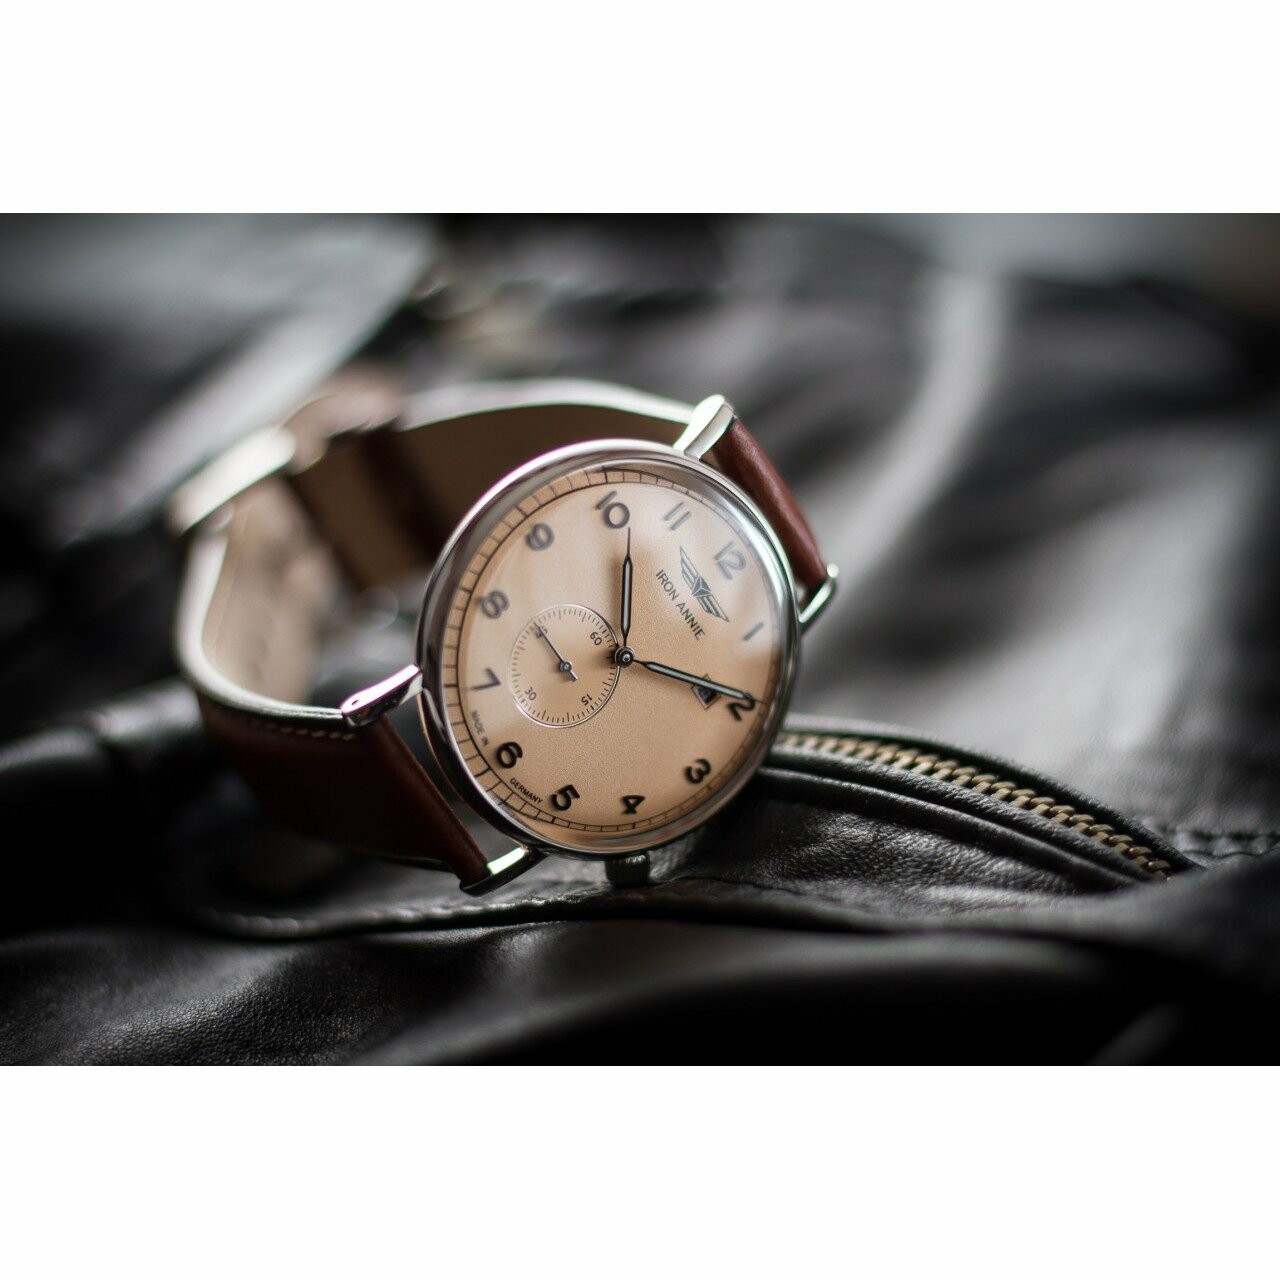 Purchase Iron Annie Amazonas Impression 5934-3 watch